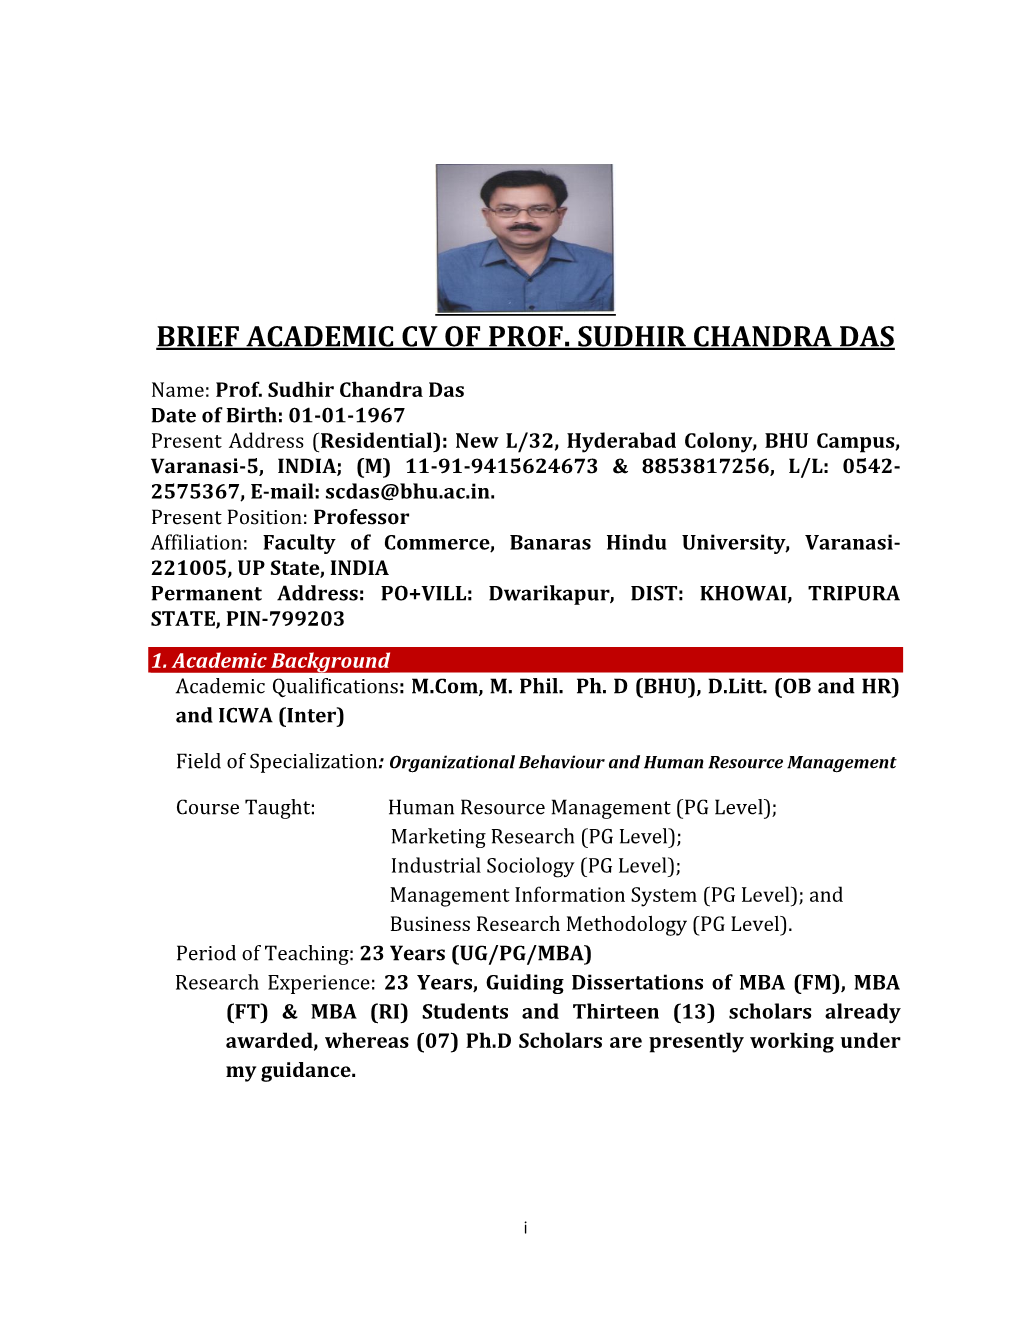 Brief Academic Cv of Prof. Sudhir Chandra Das